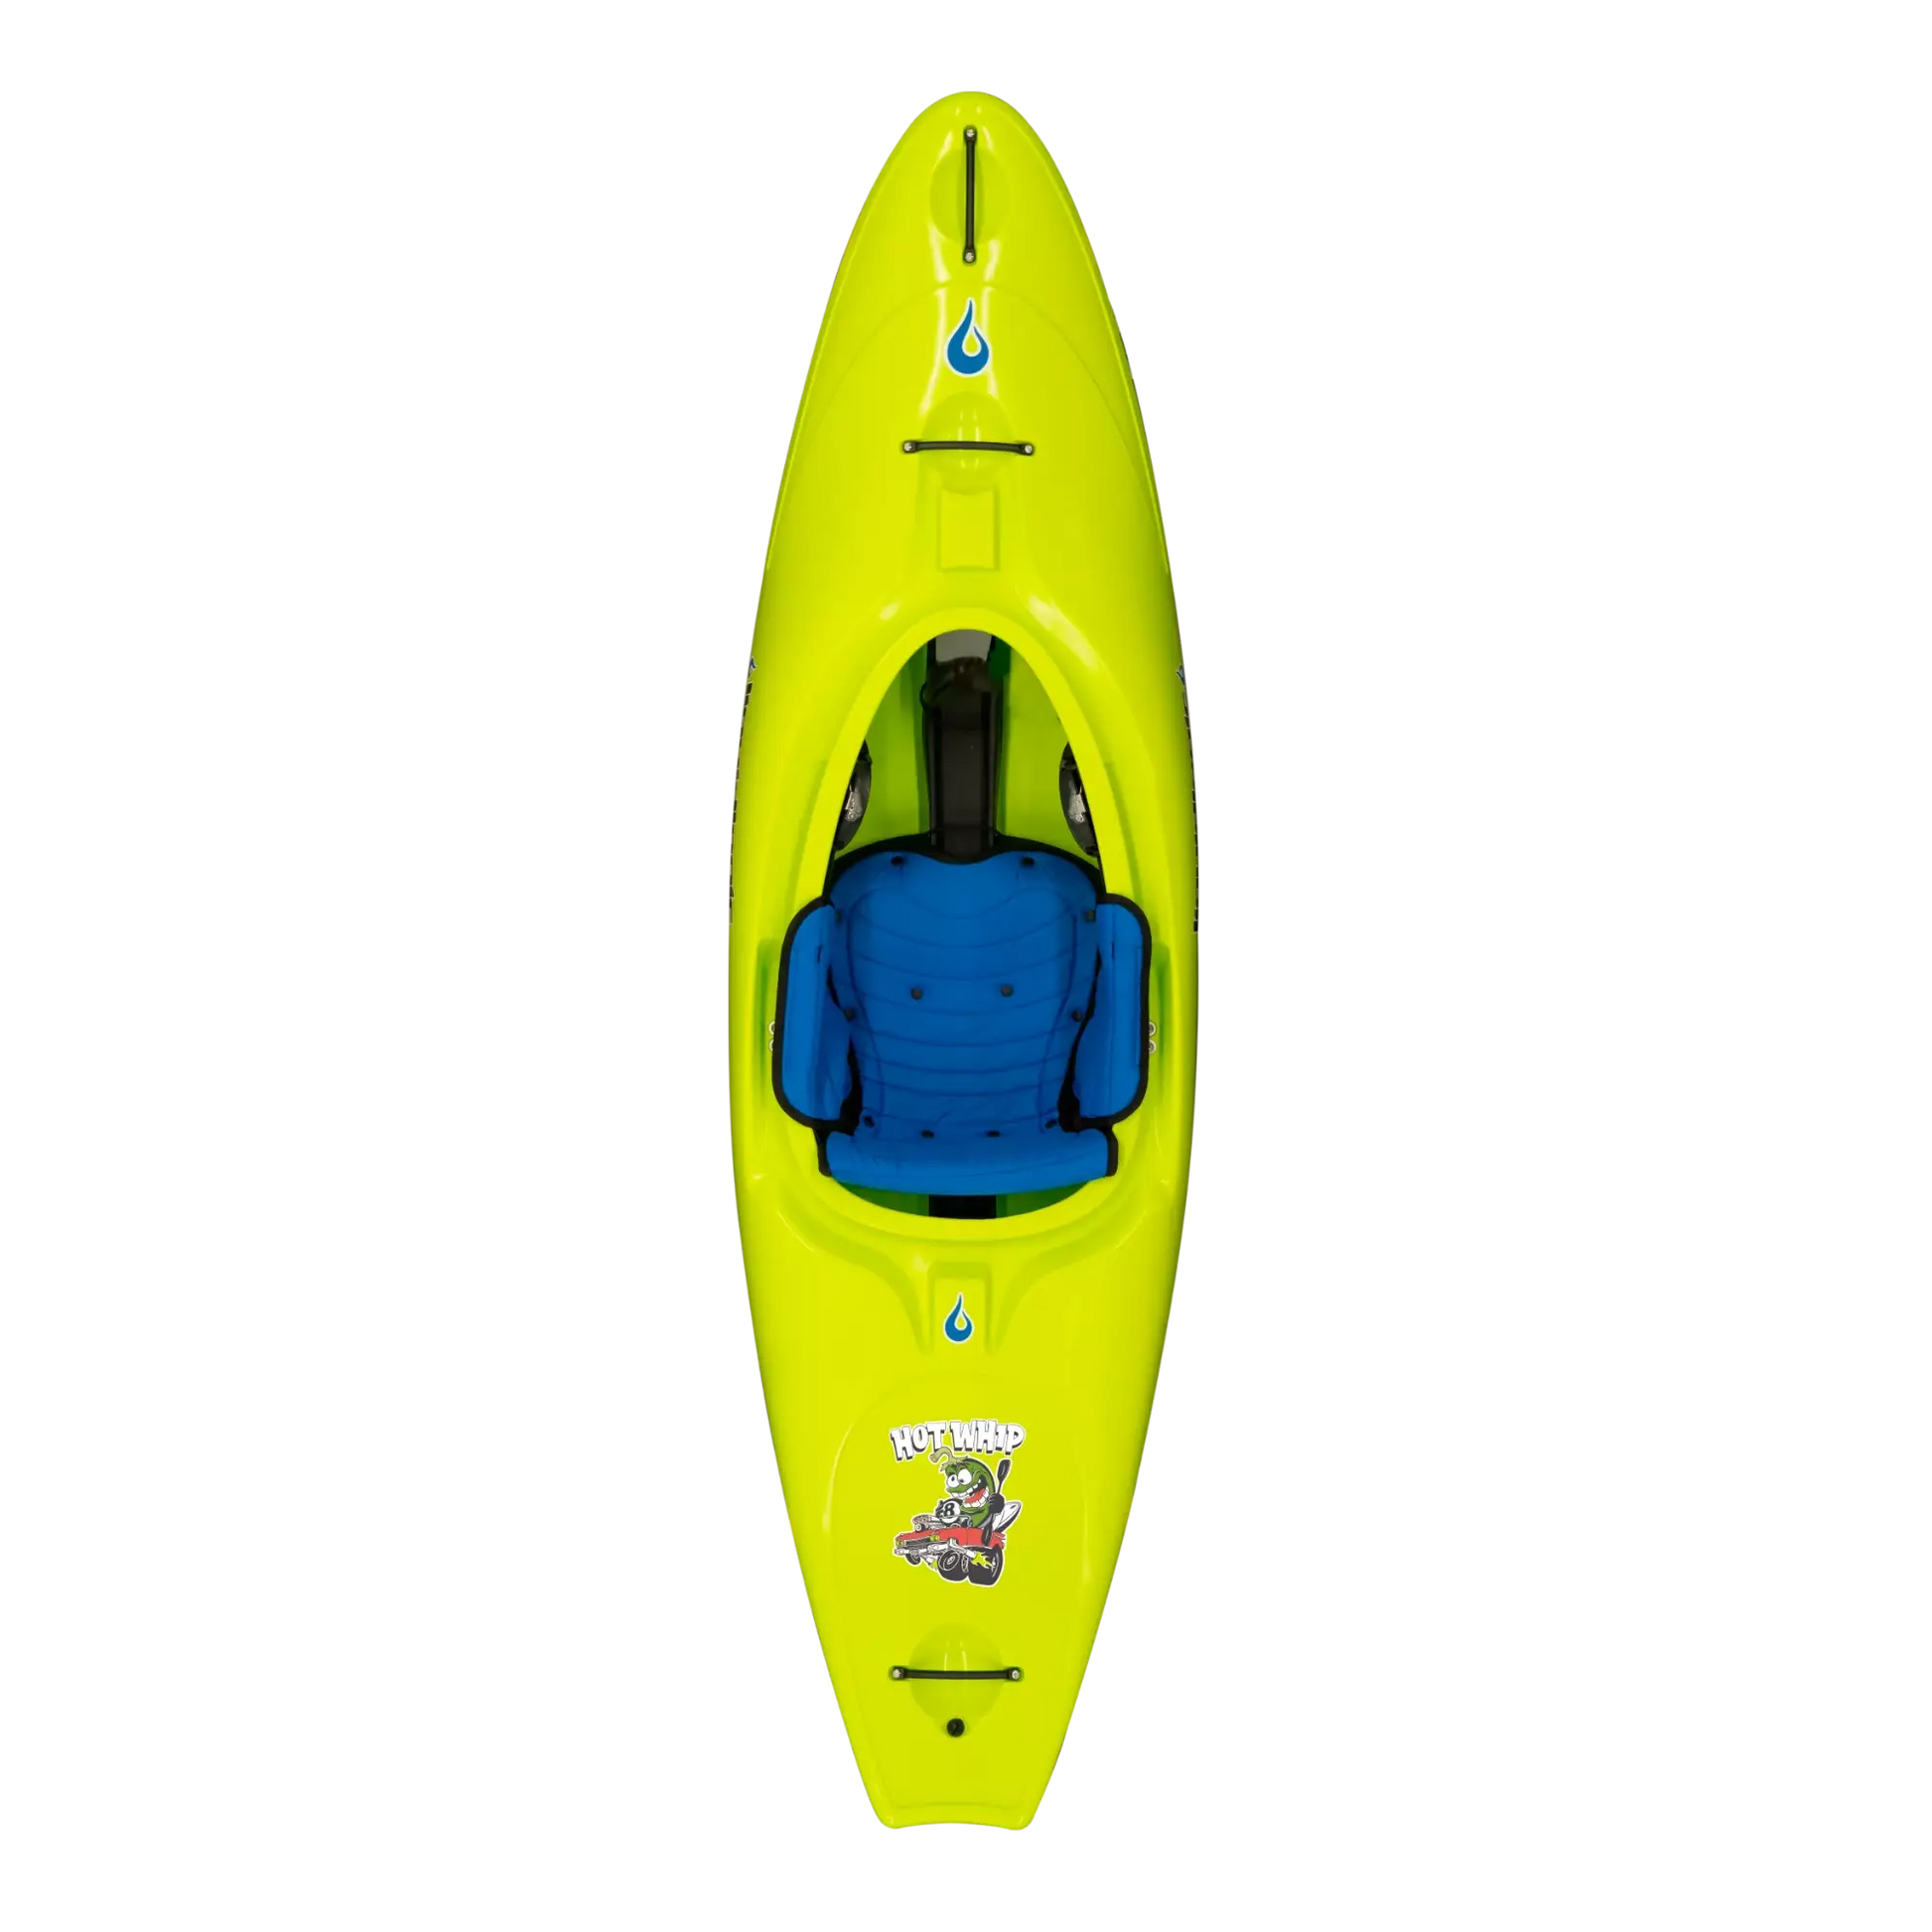 A yellow LiquidLogic kayak with blue seat.